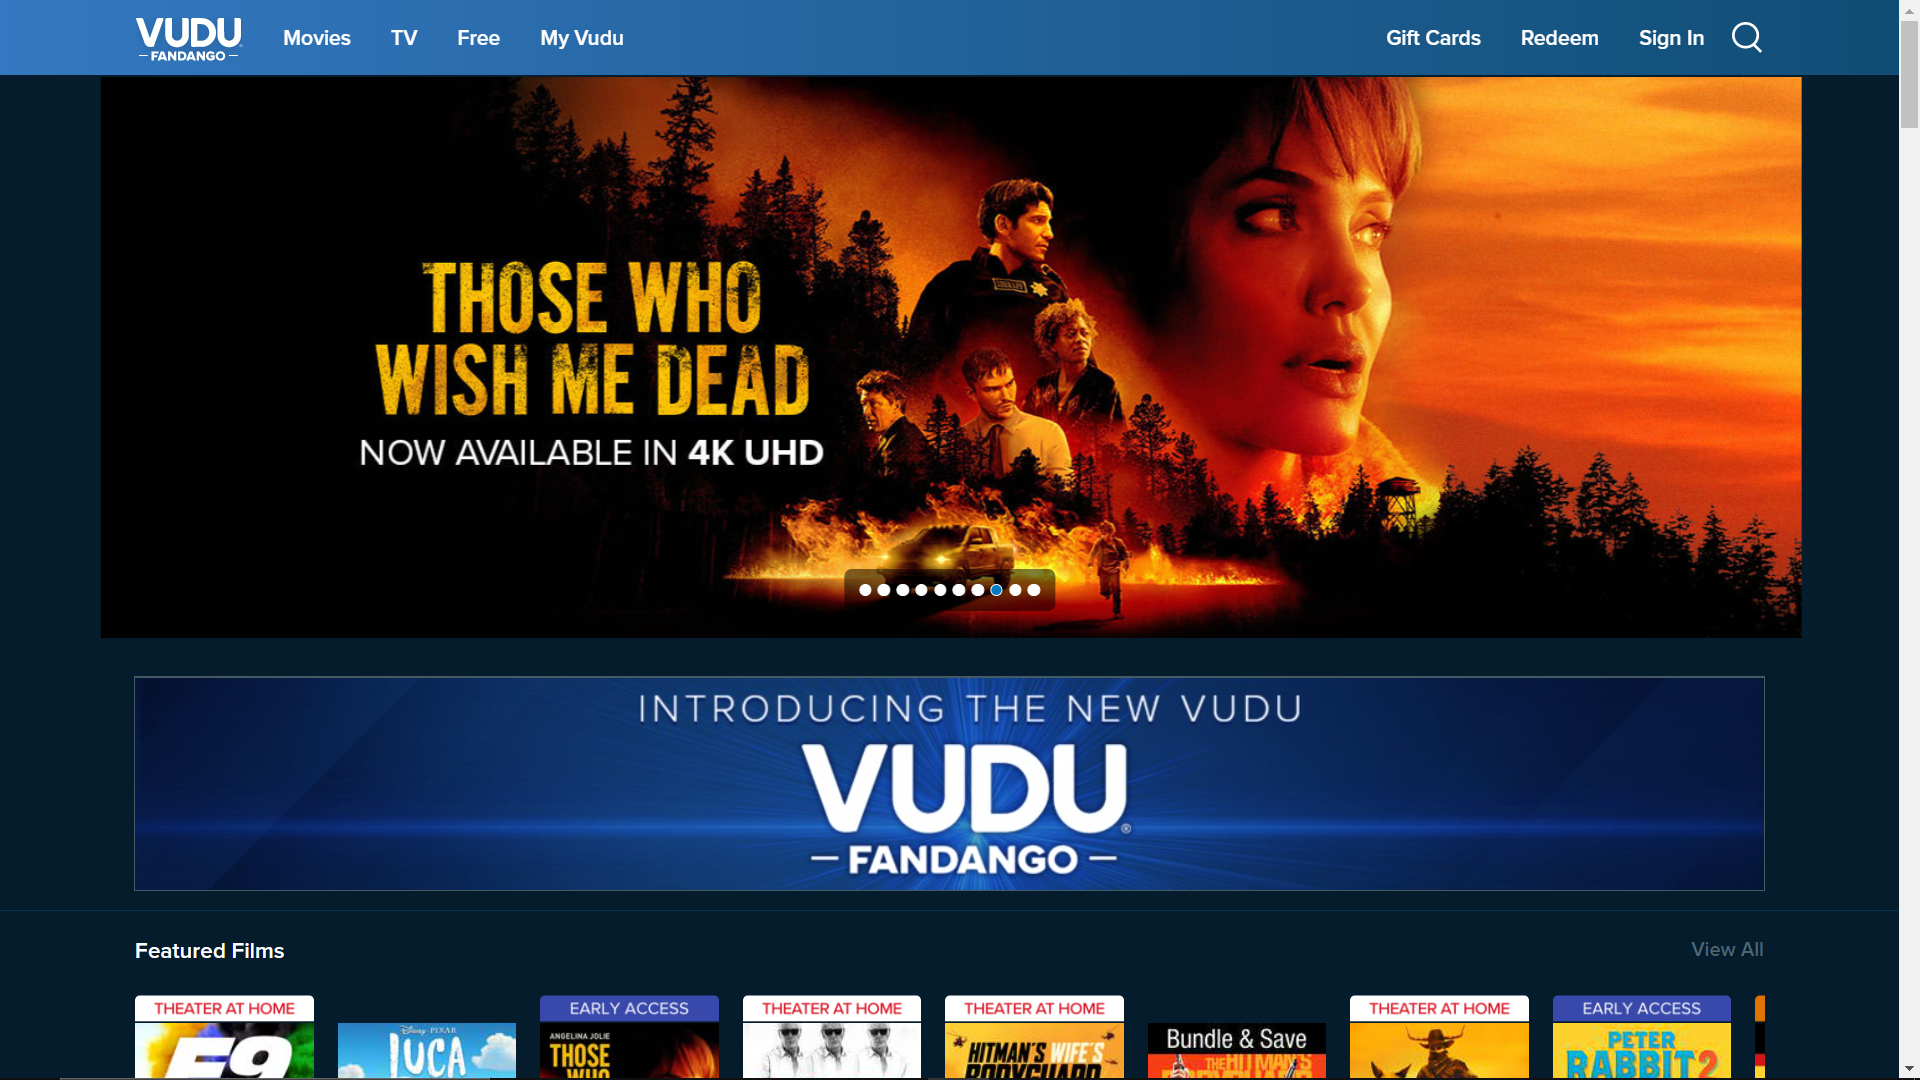 Watch VUDU TV From Anywhere